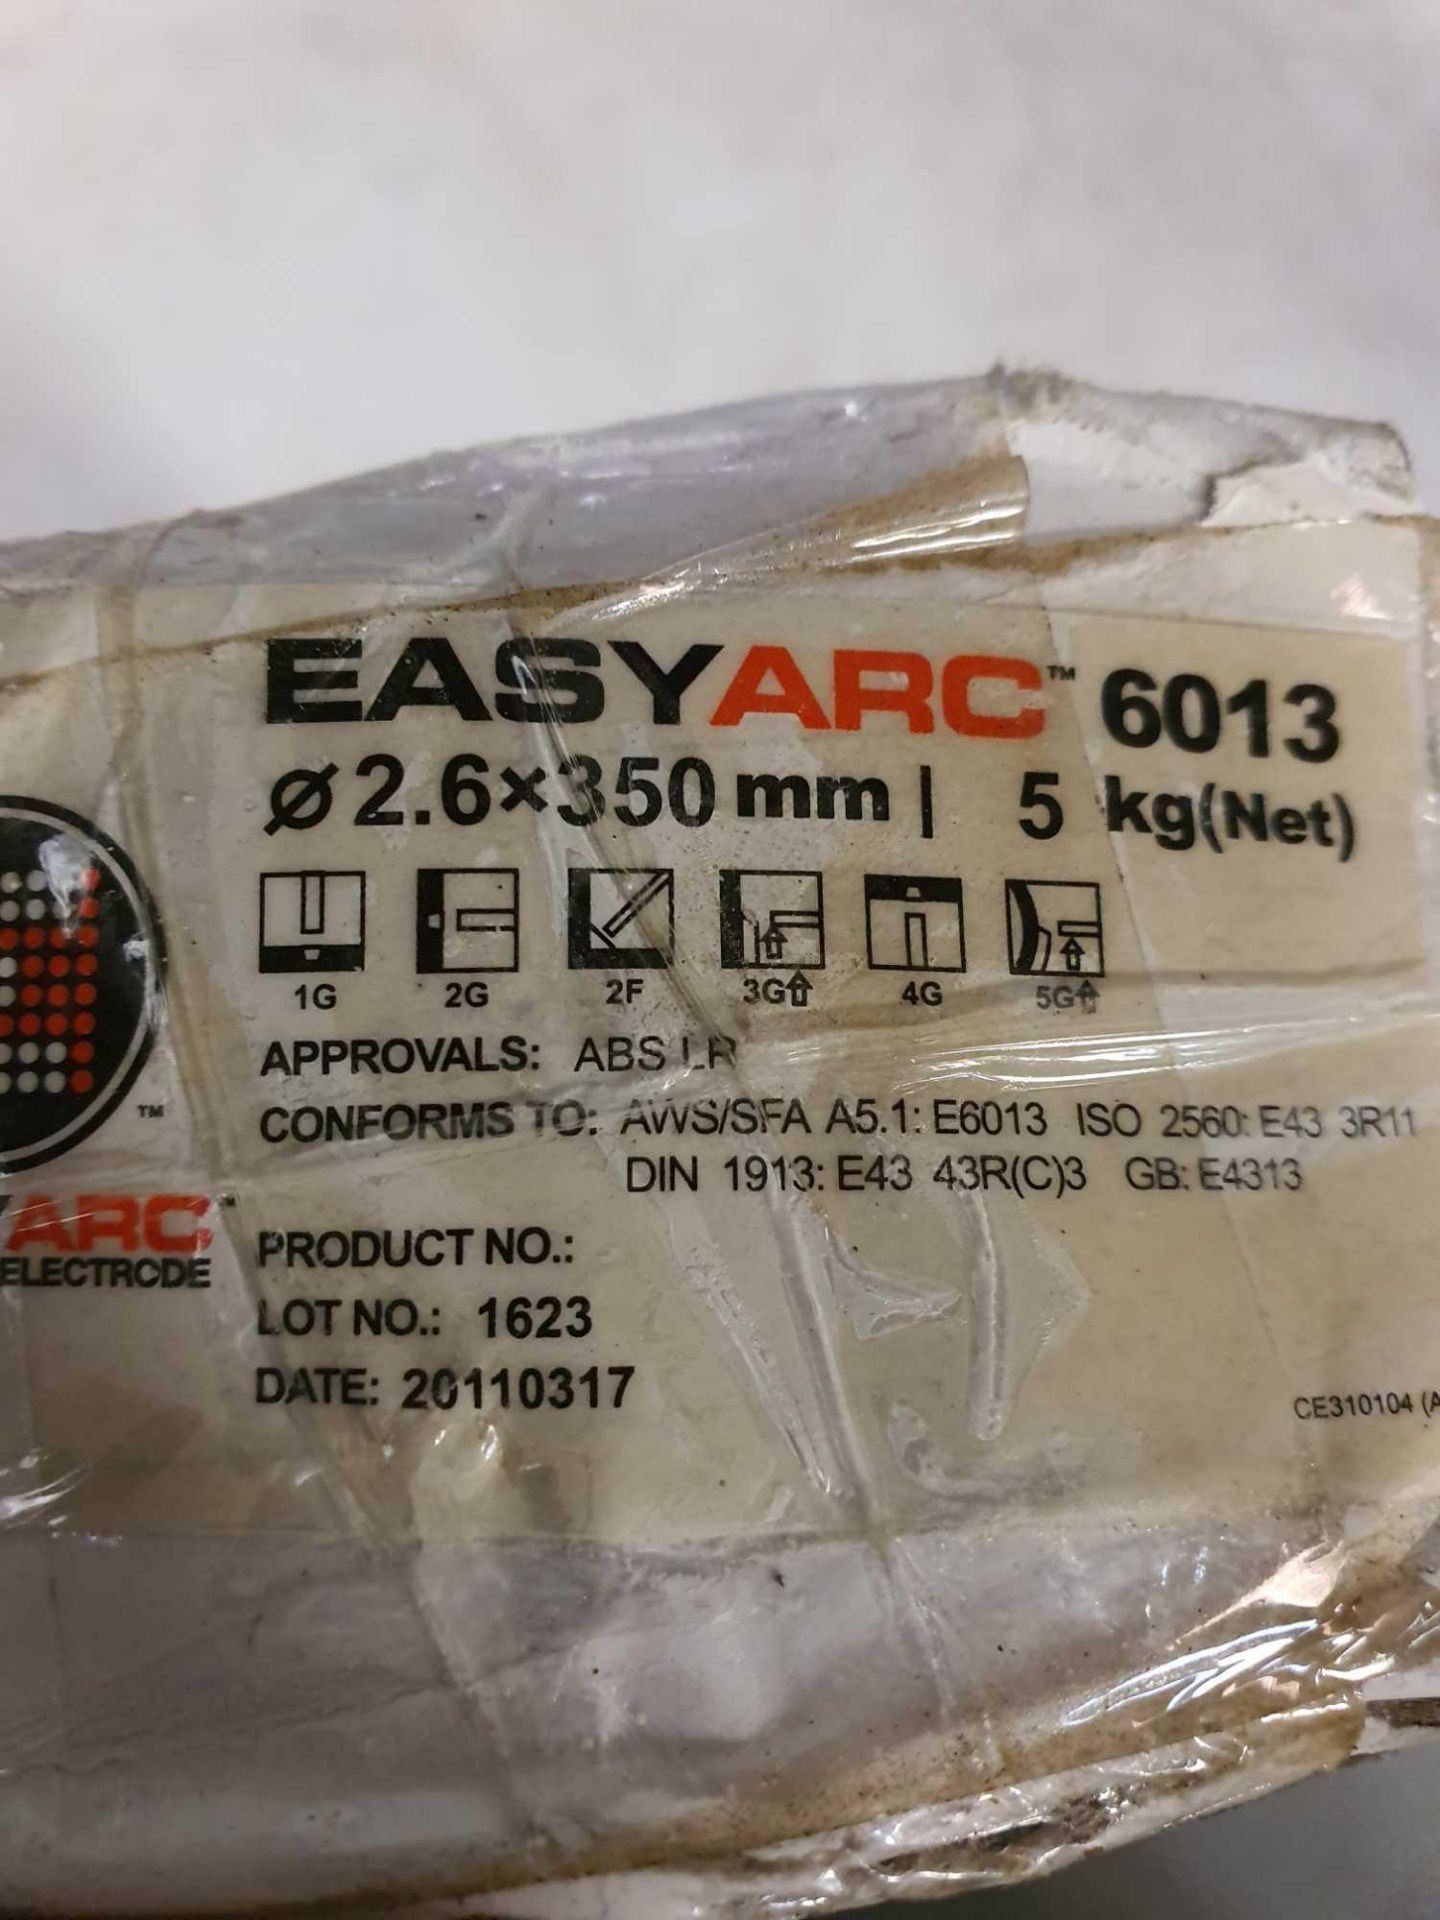 Easyarc electrode - Image 2 of 2